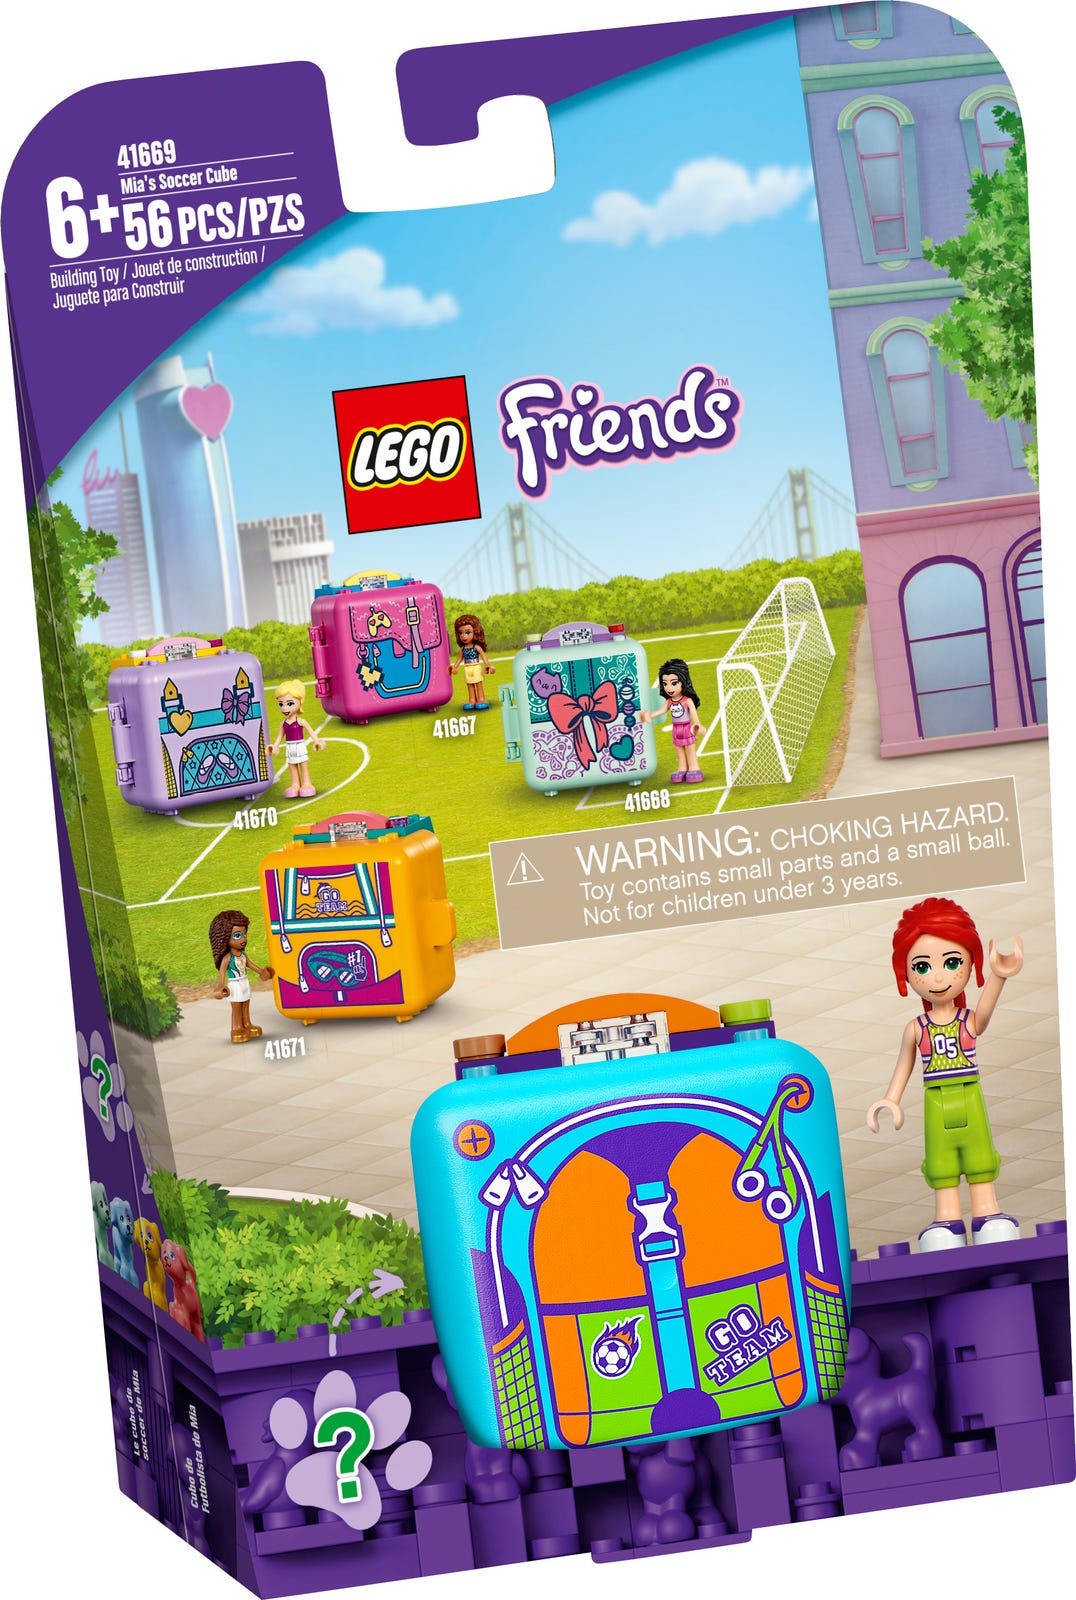 Lego Friends Mia's Soccer Cube 41669